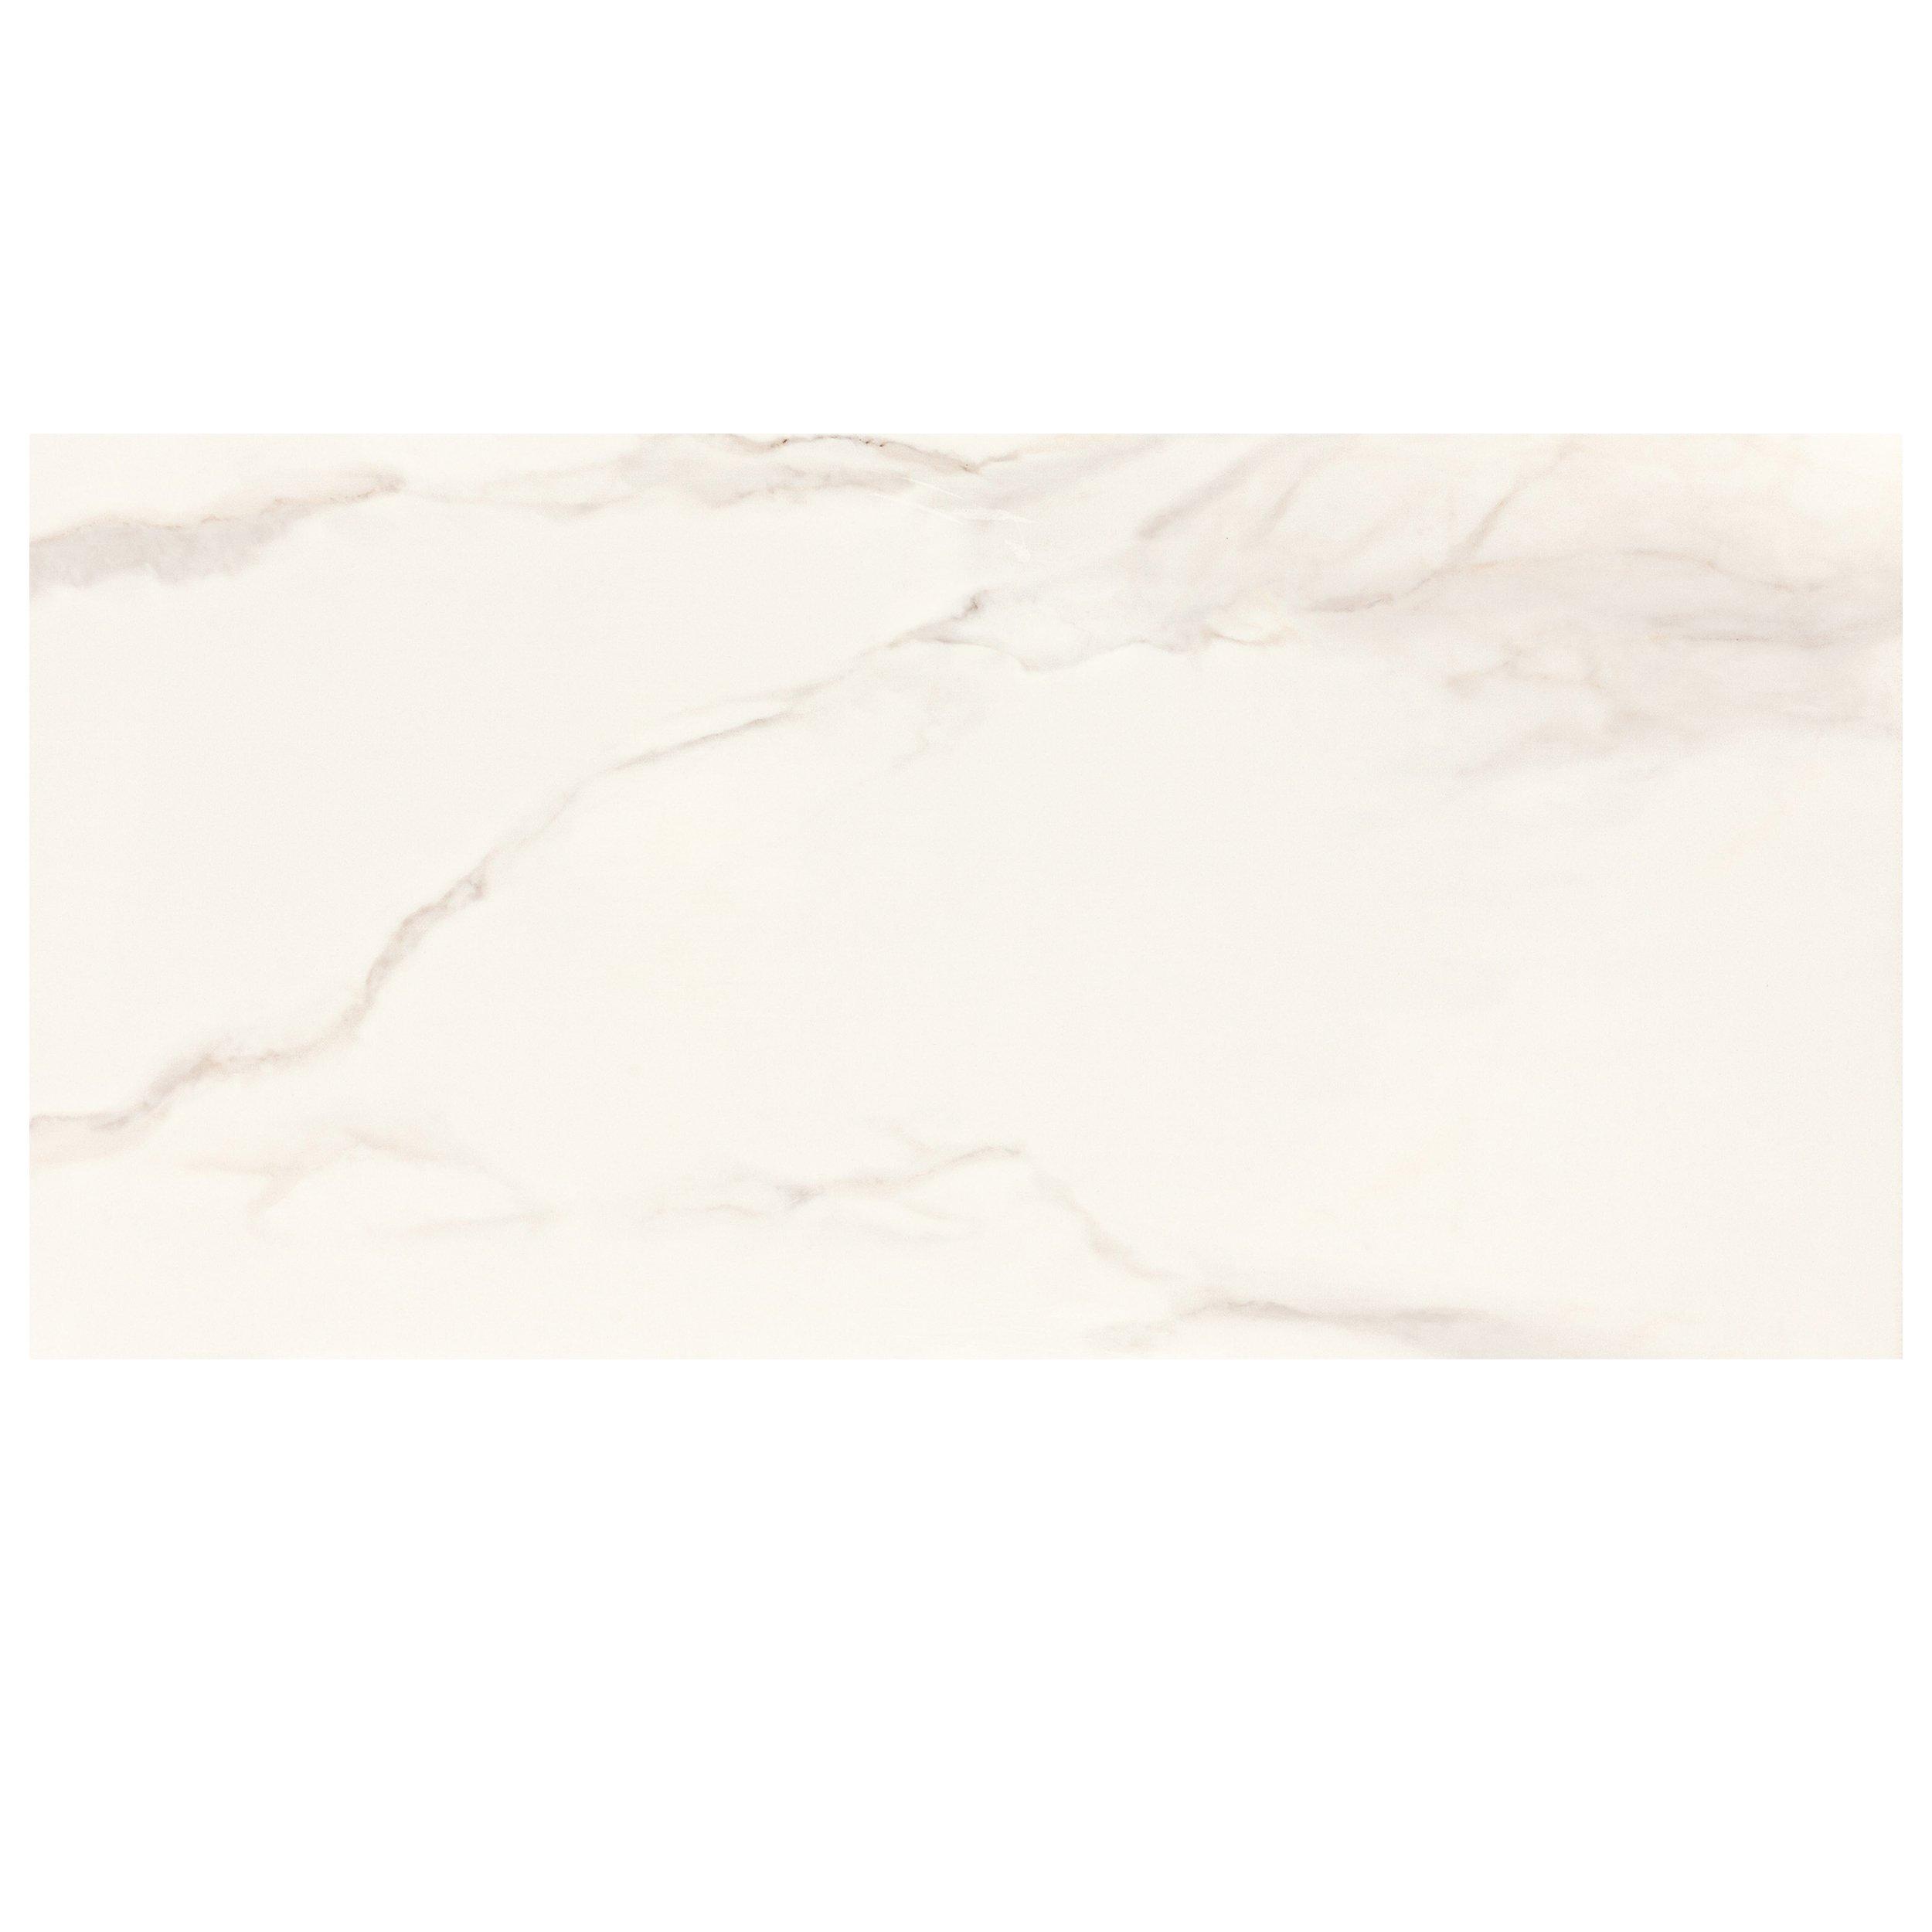 Andover White Polished Porcelain Tile | Floor and Decor